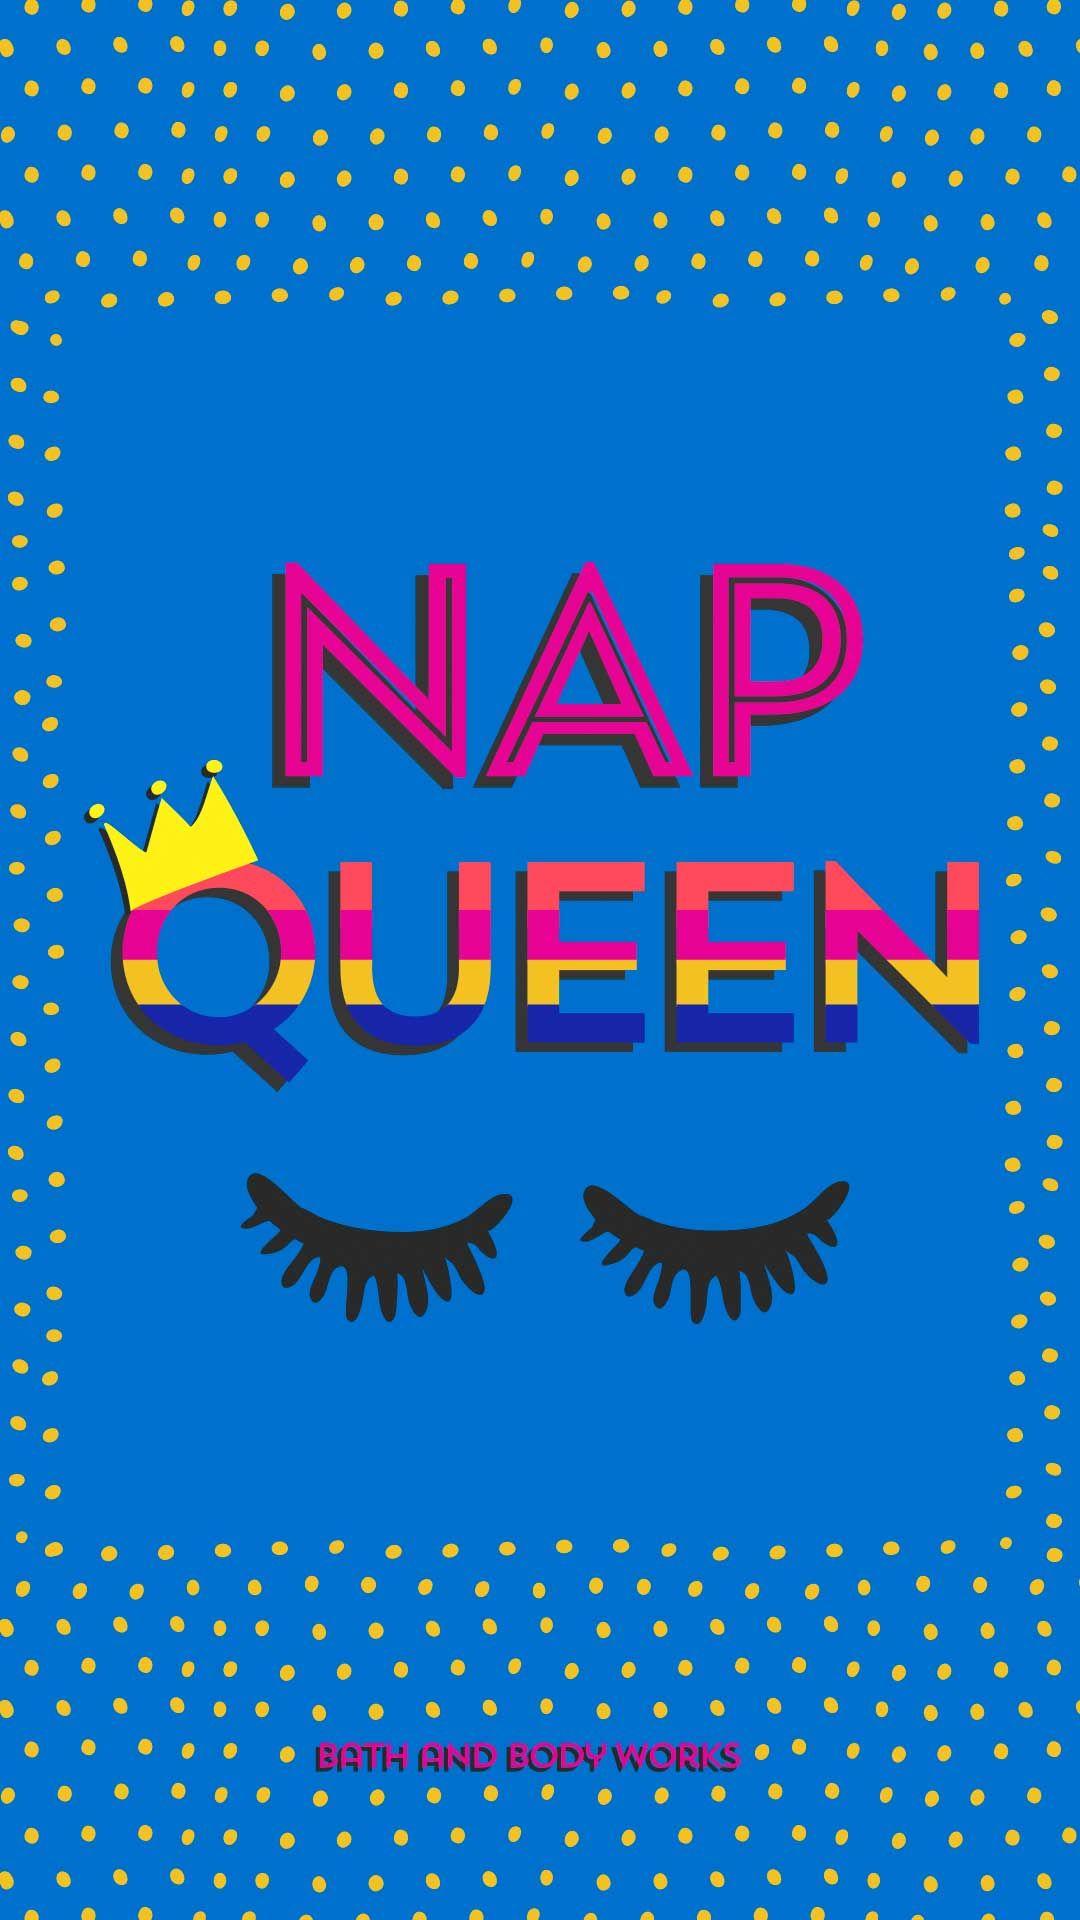 Nap Queen iPhone Wallpaper. Pretty phone wallpaper, Ipod